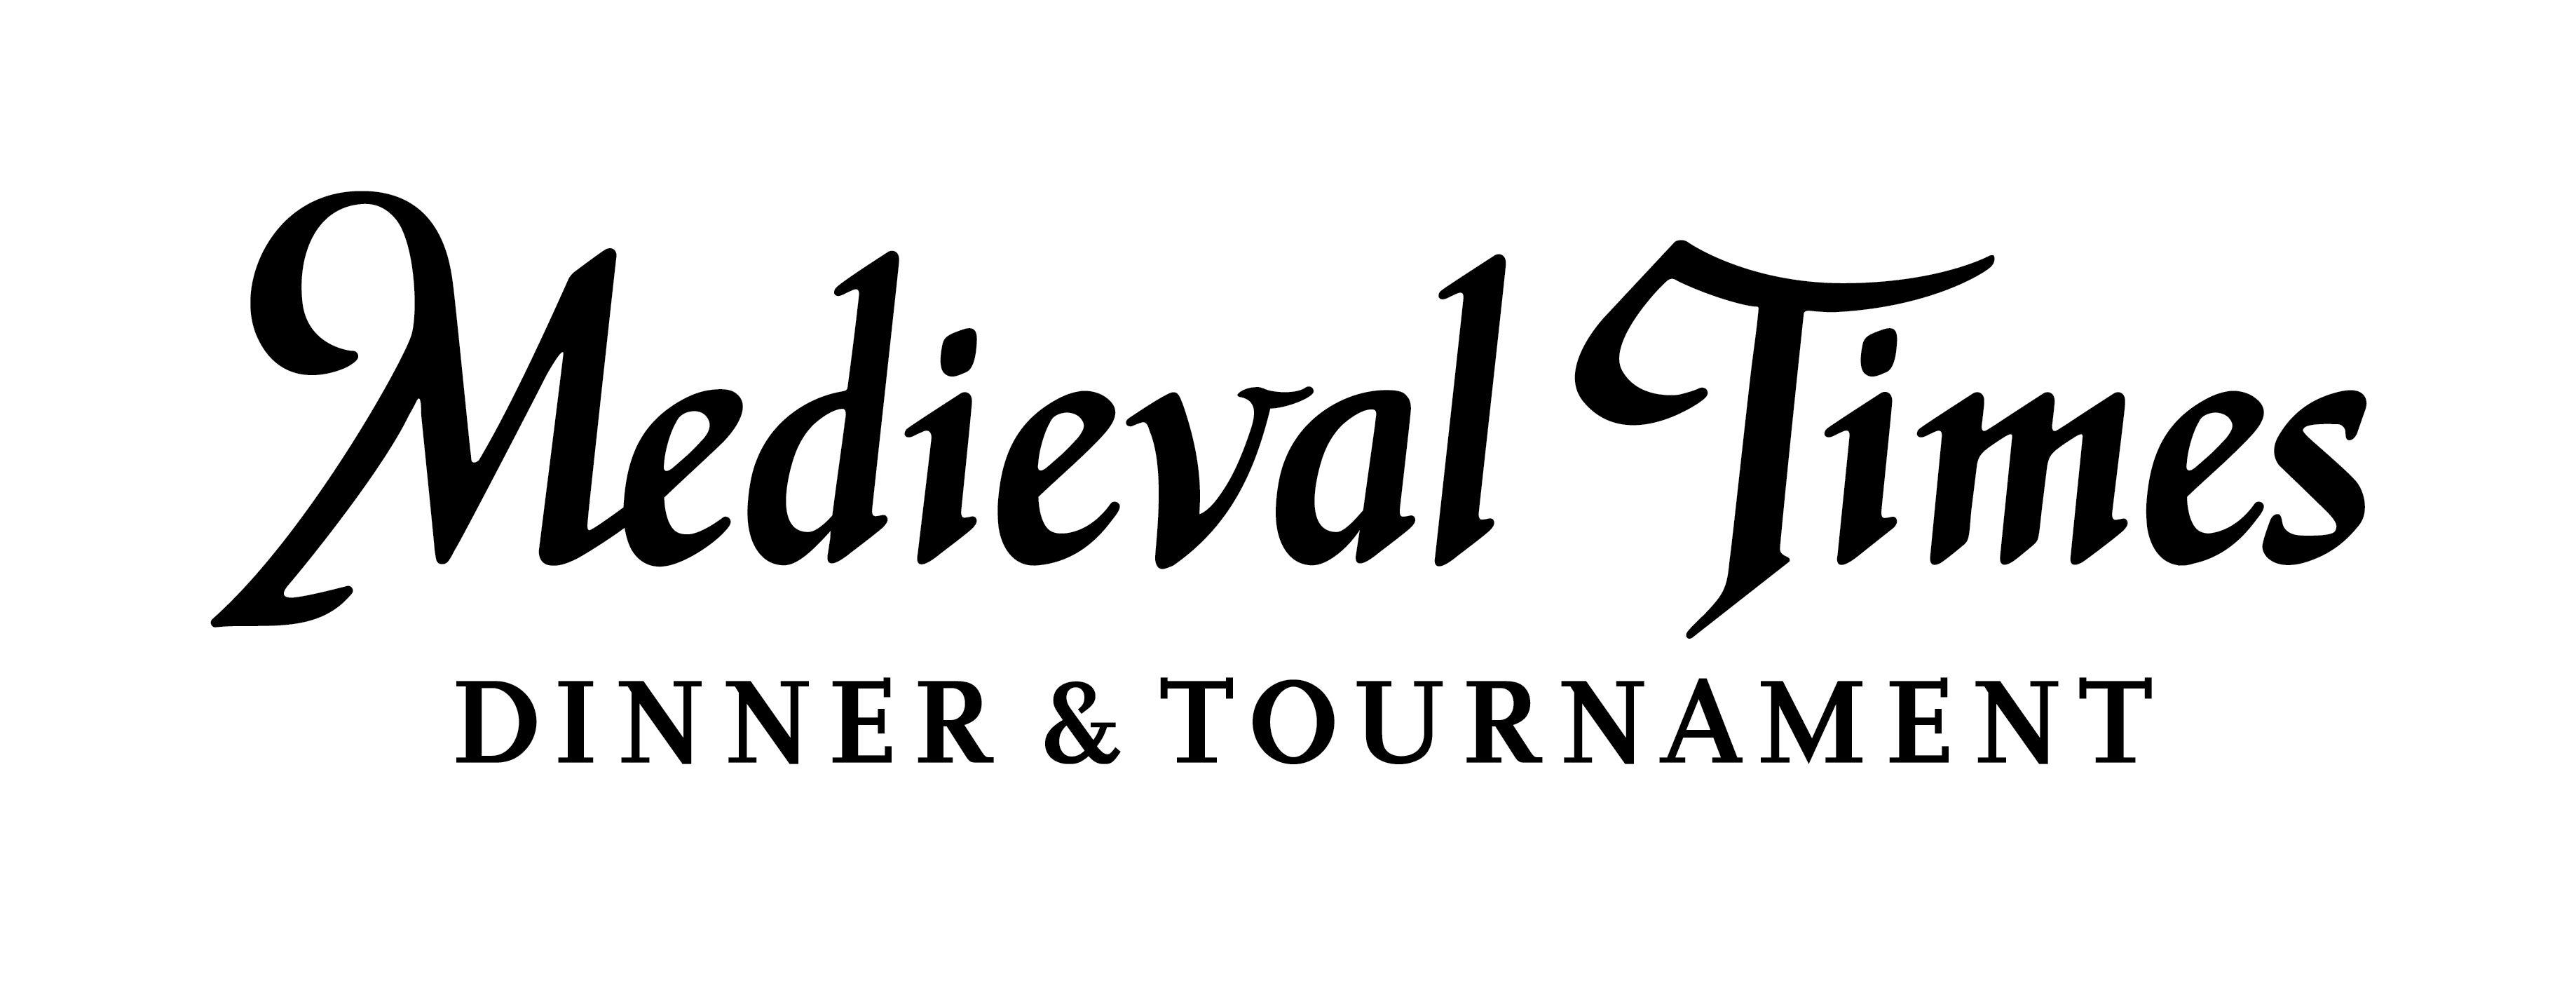 Mideveal Logo - medieval-times-logo